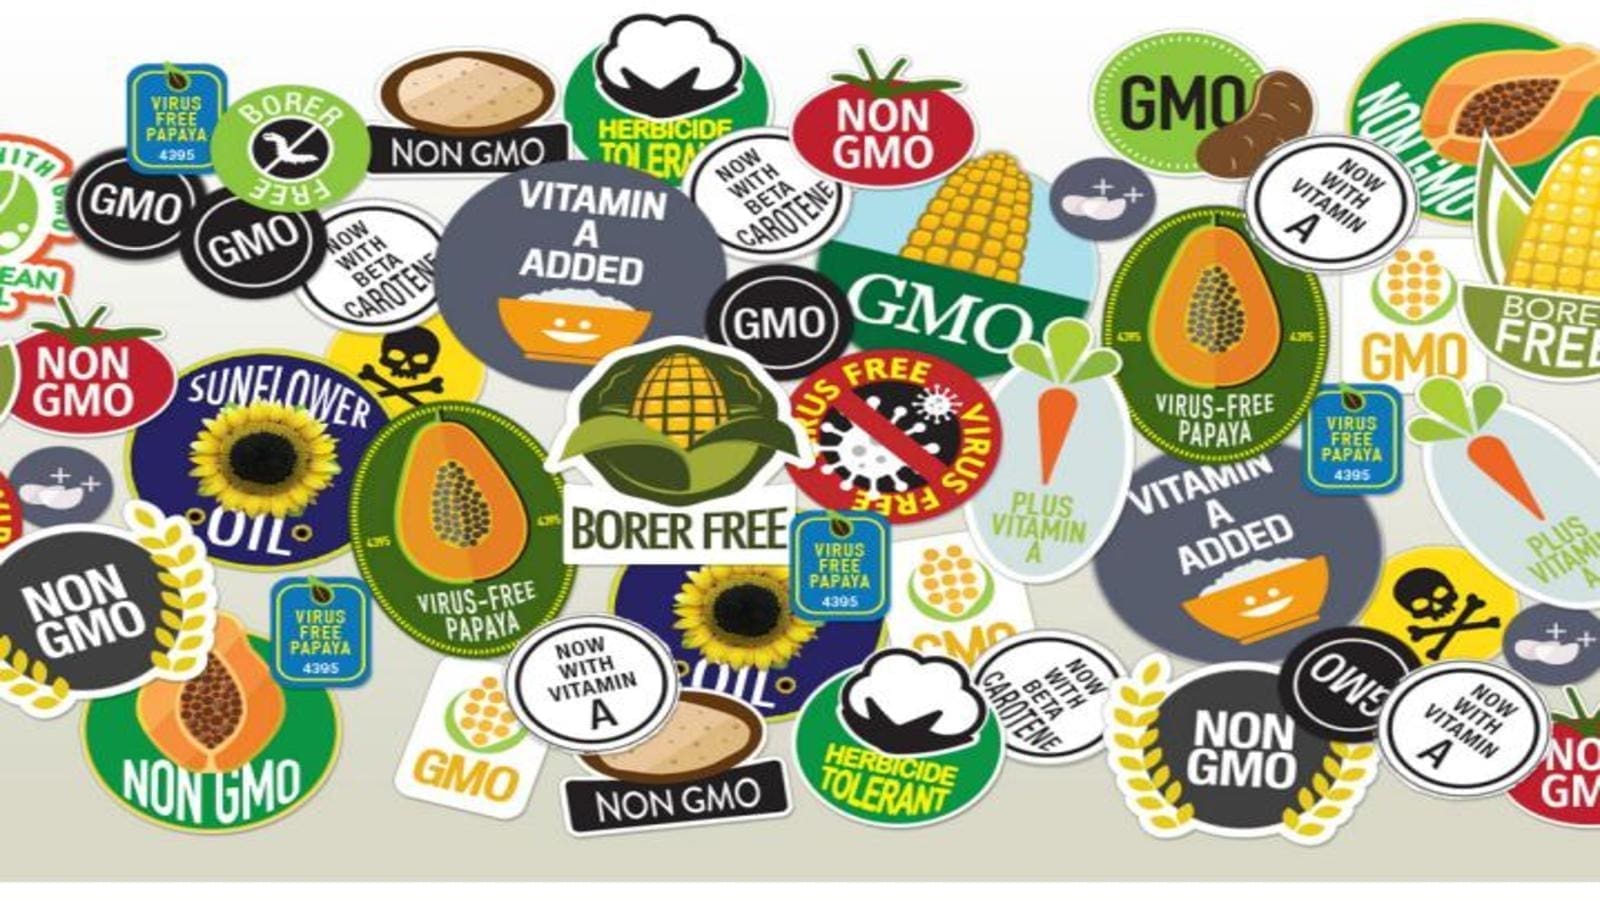 AU on its way to establishing guidelines on GMO use